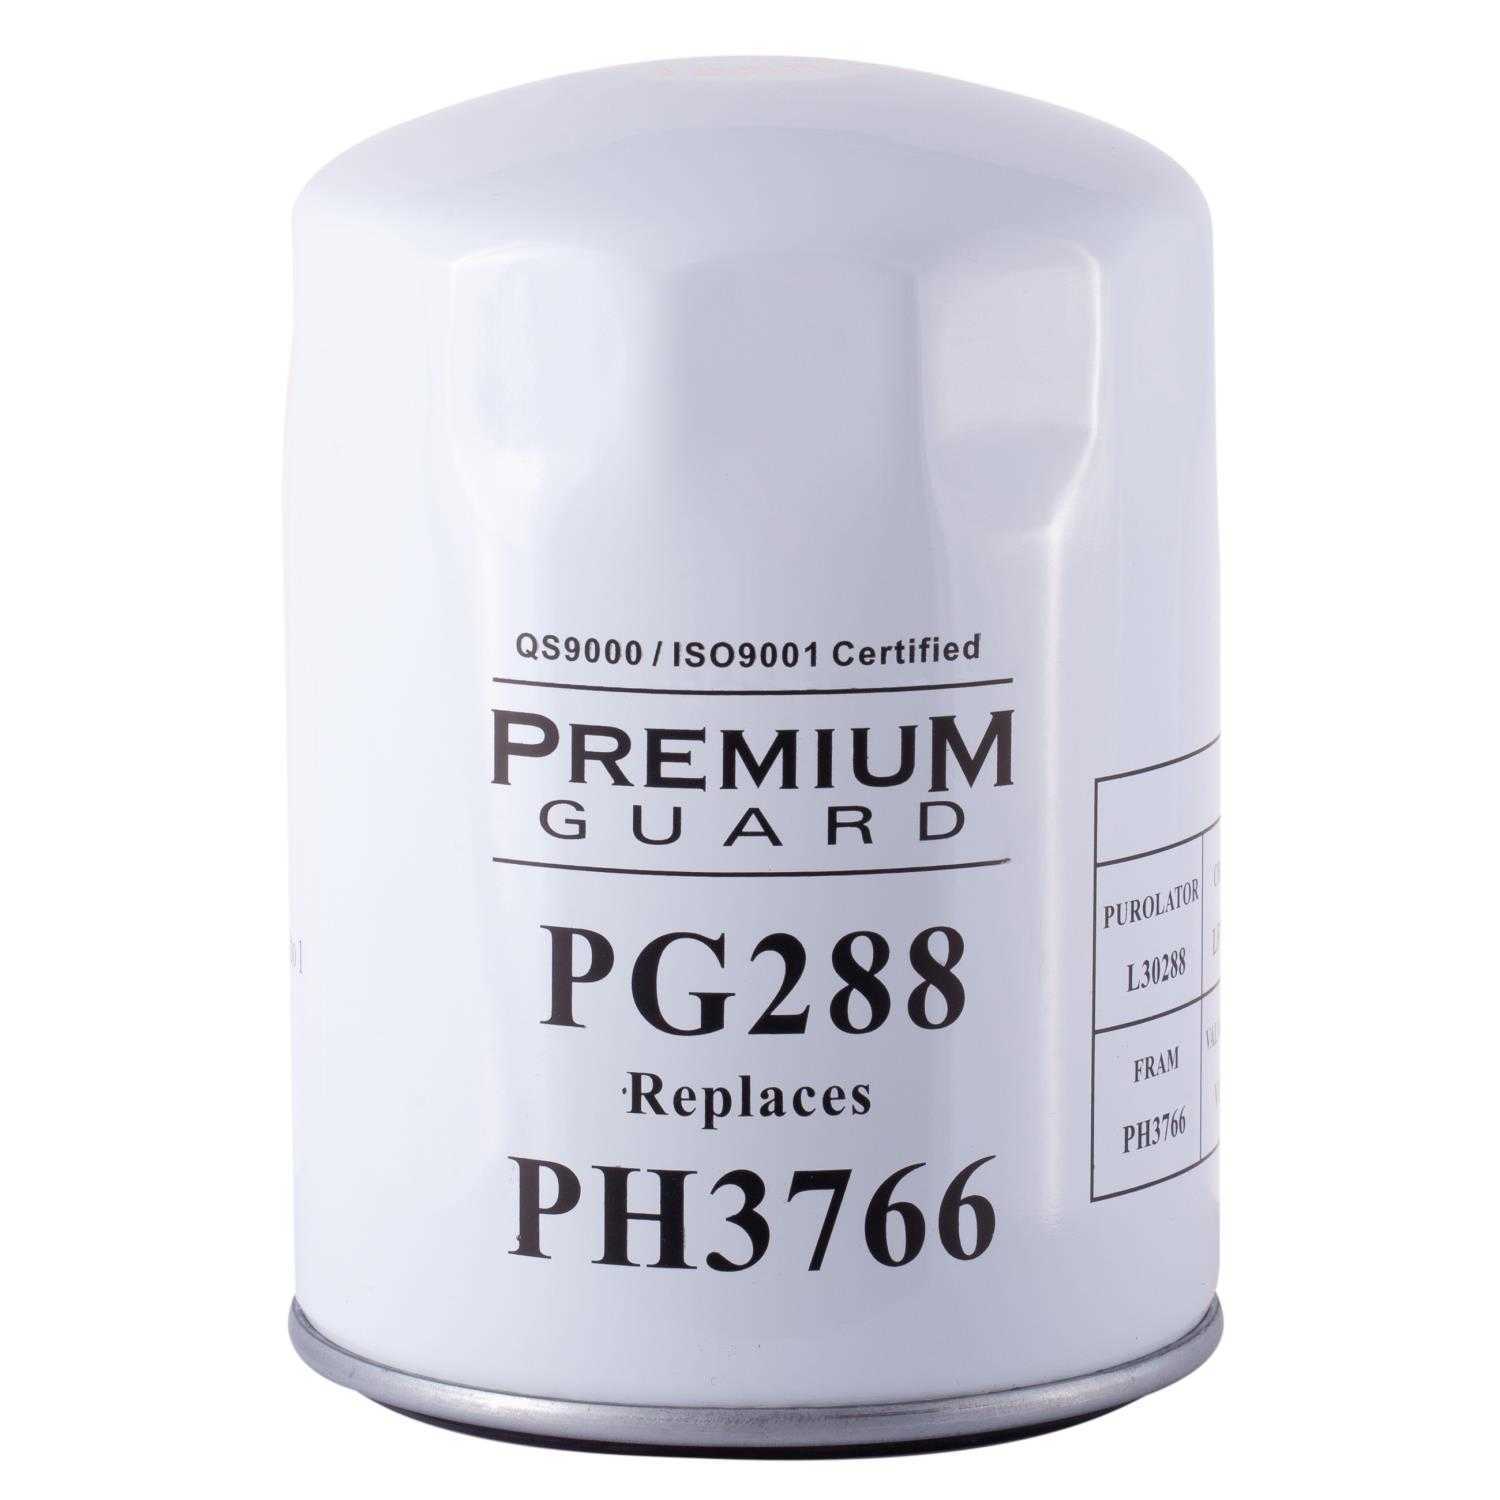 PREMIUM GUARD - Standard Life Oil Filter Element - PRG PG288